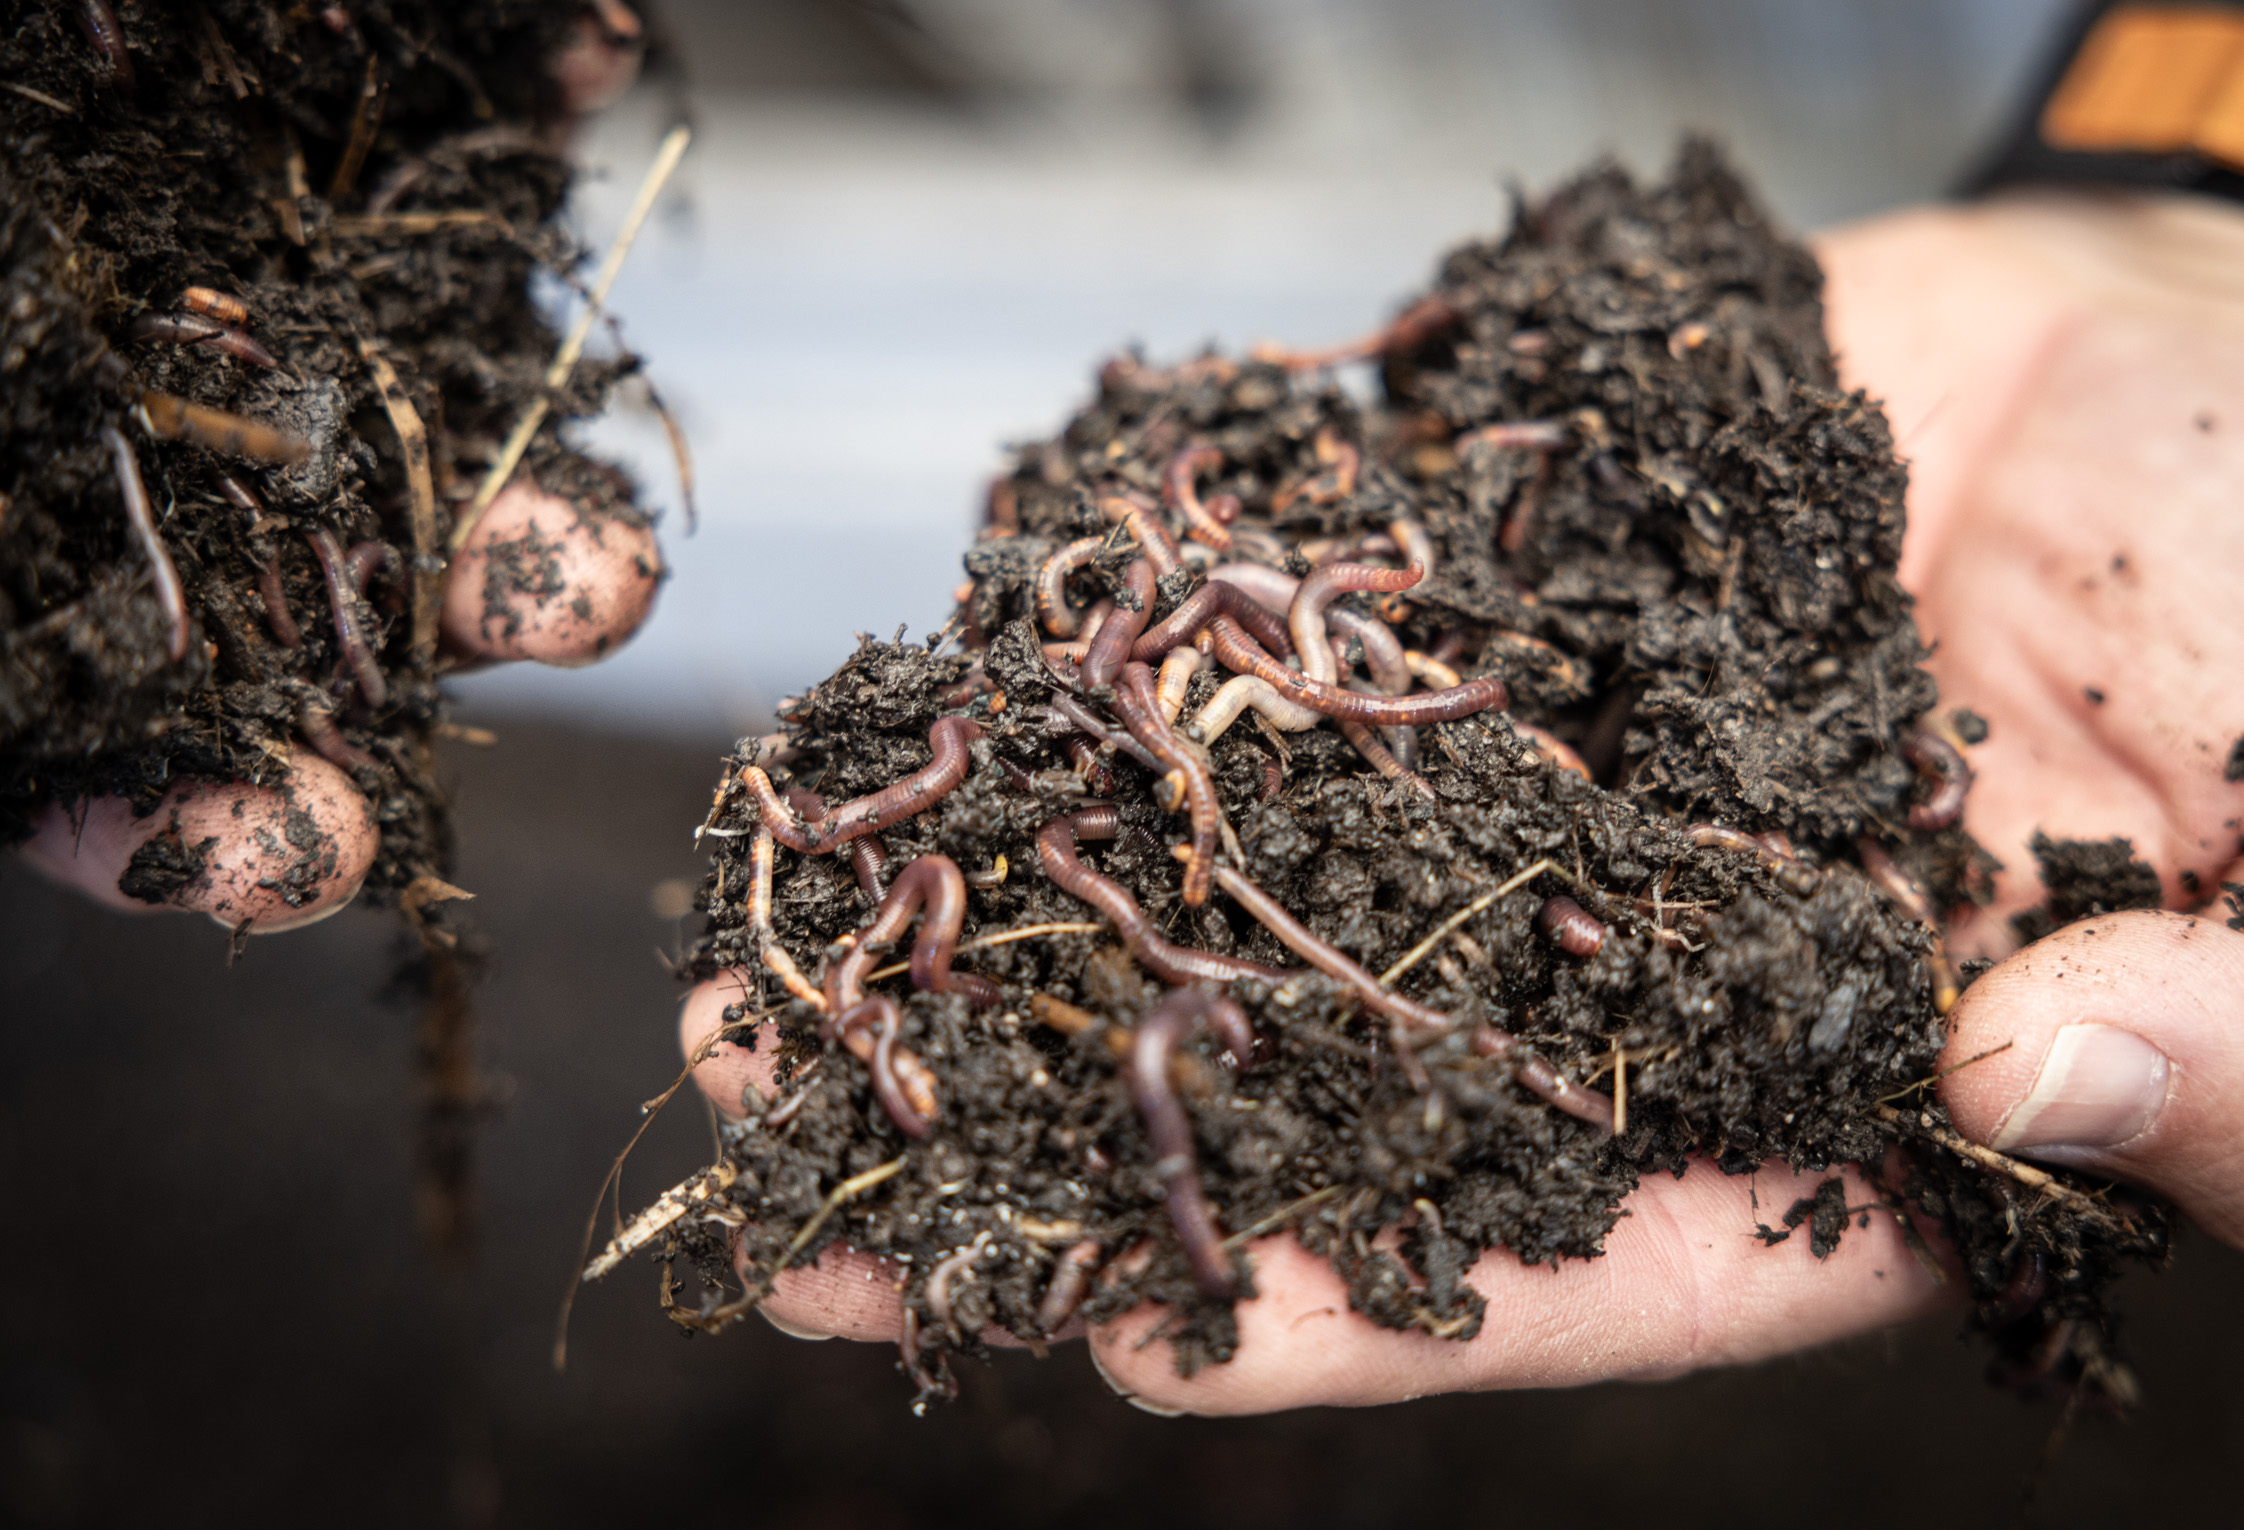 Earthworms in biodynamic soil at Austria's Vermi Grand composting farm